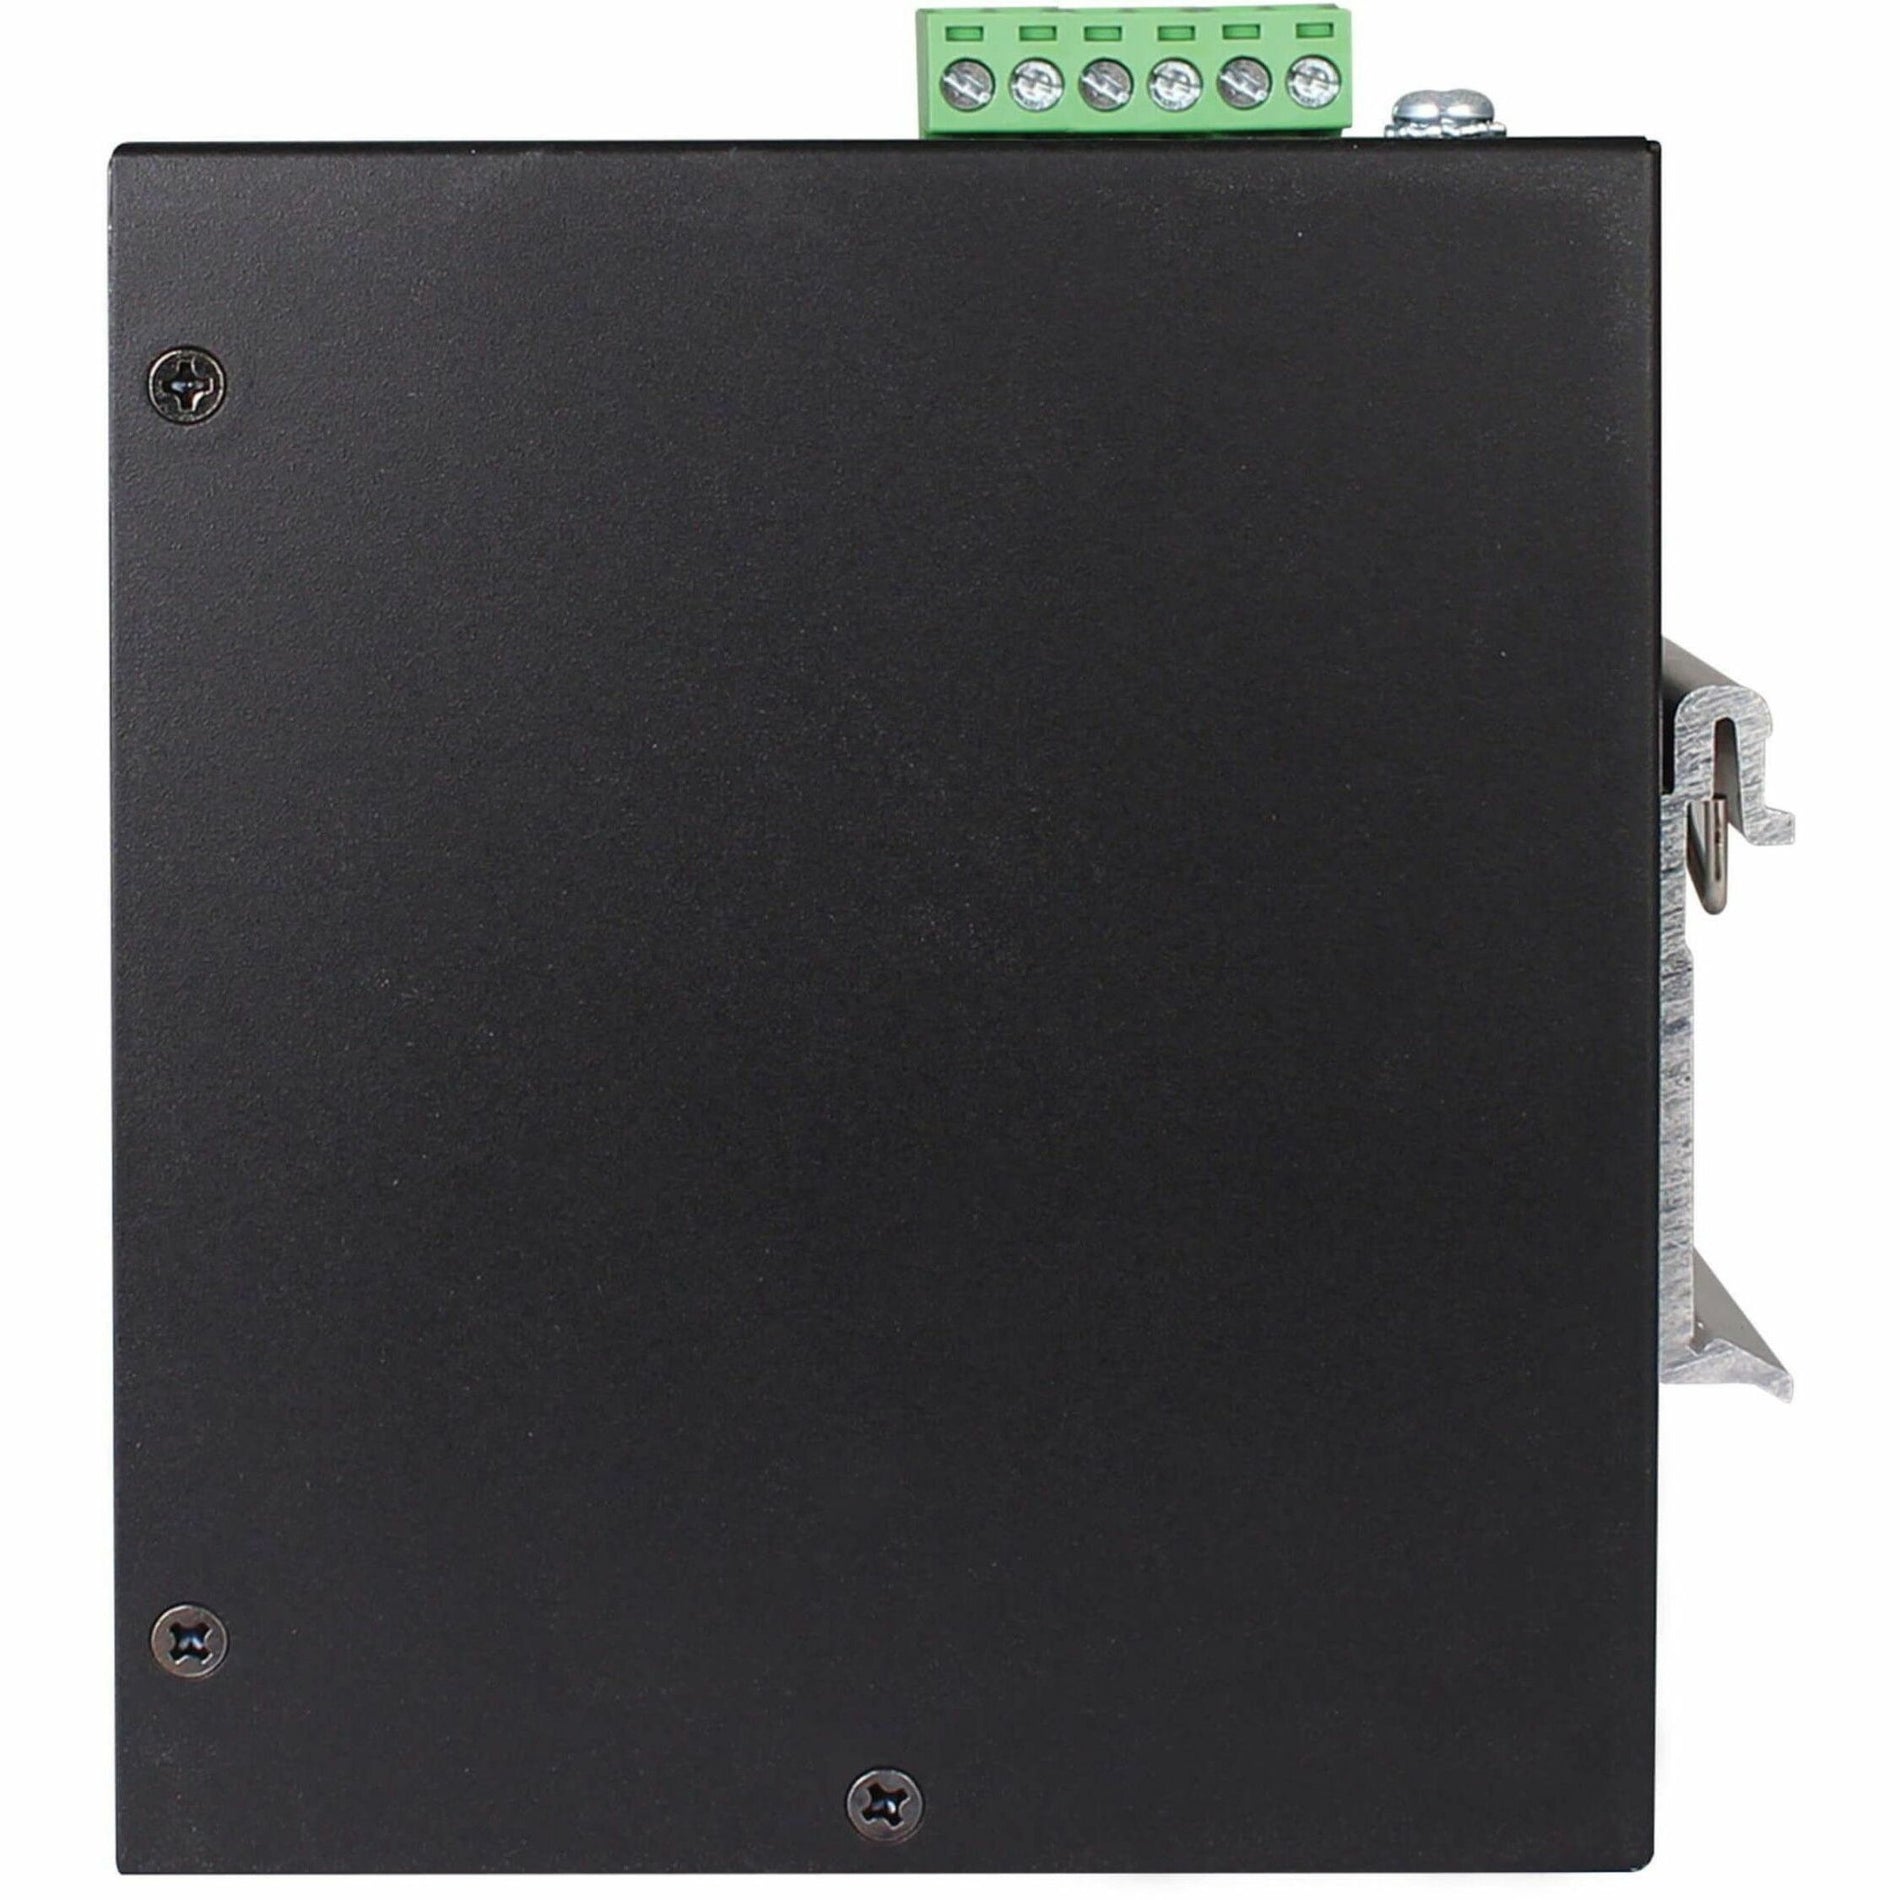 Tripp Lite NGI-U08A Ethernet Switch, 8-Port Gigabit Network, TAA Compliant